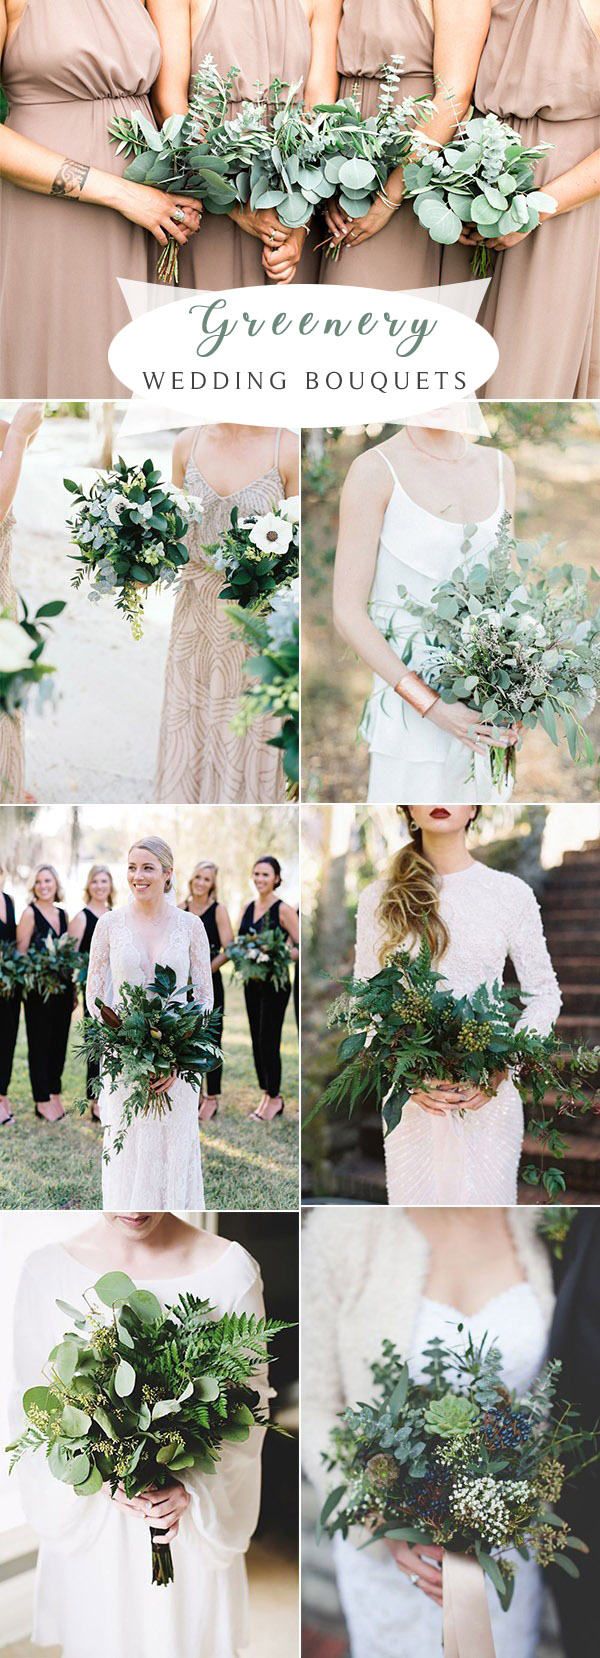 Greenery Wedding Bouquets Ideas